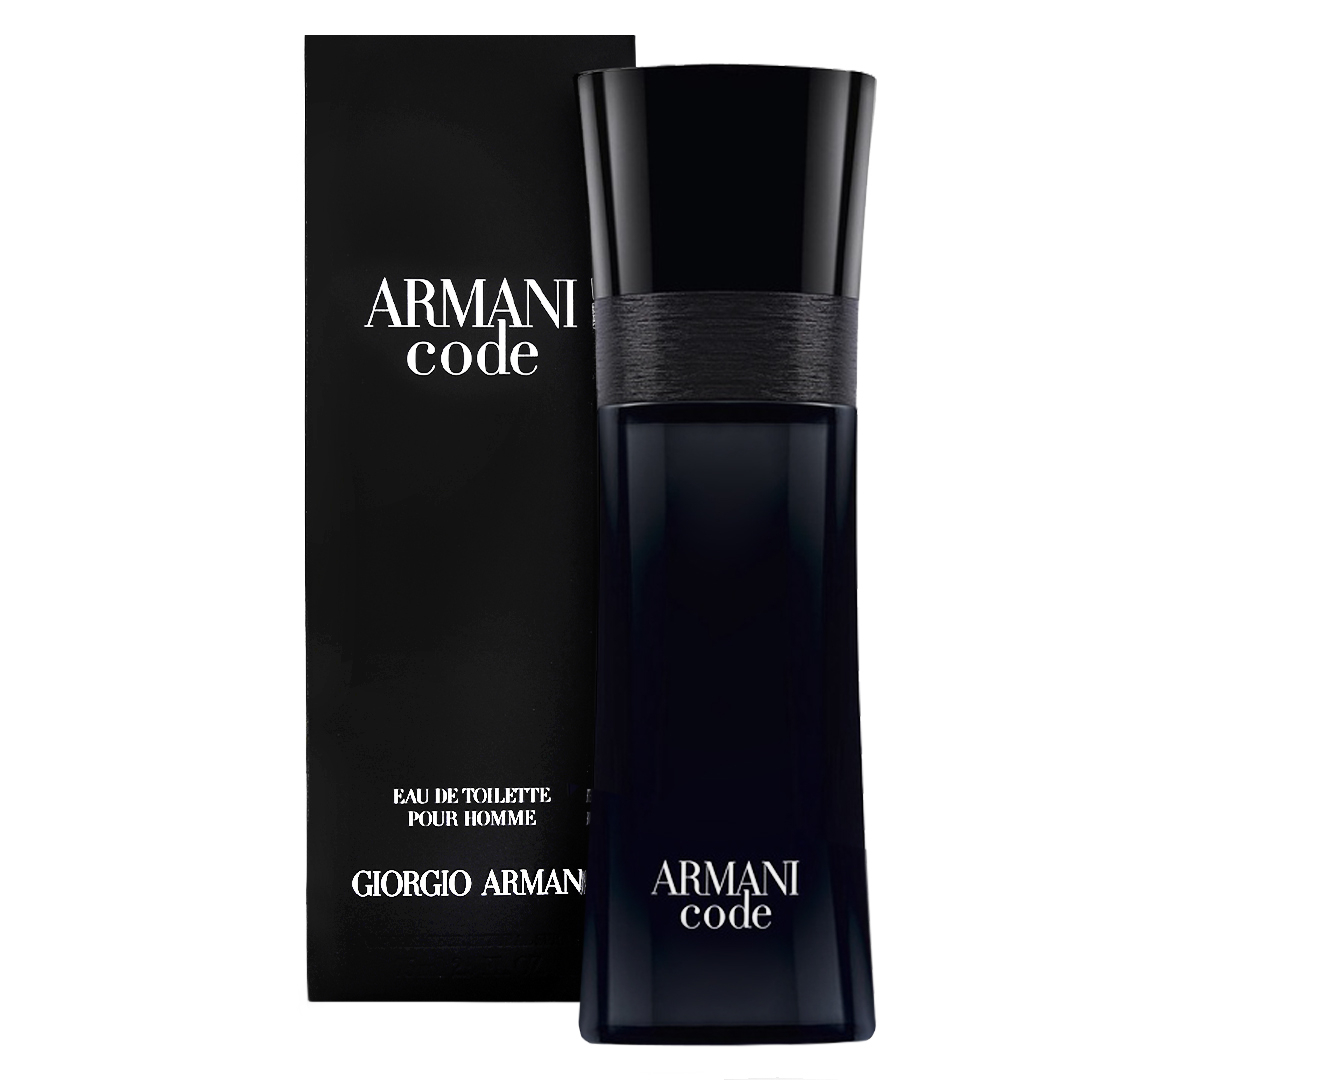 Giorgio Armani Armani Code For Men EDT Perfume 75mL | Catch.com.au